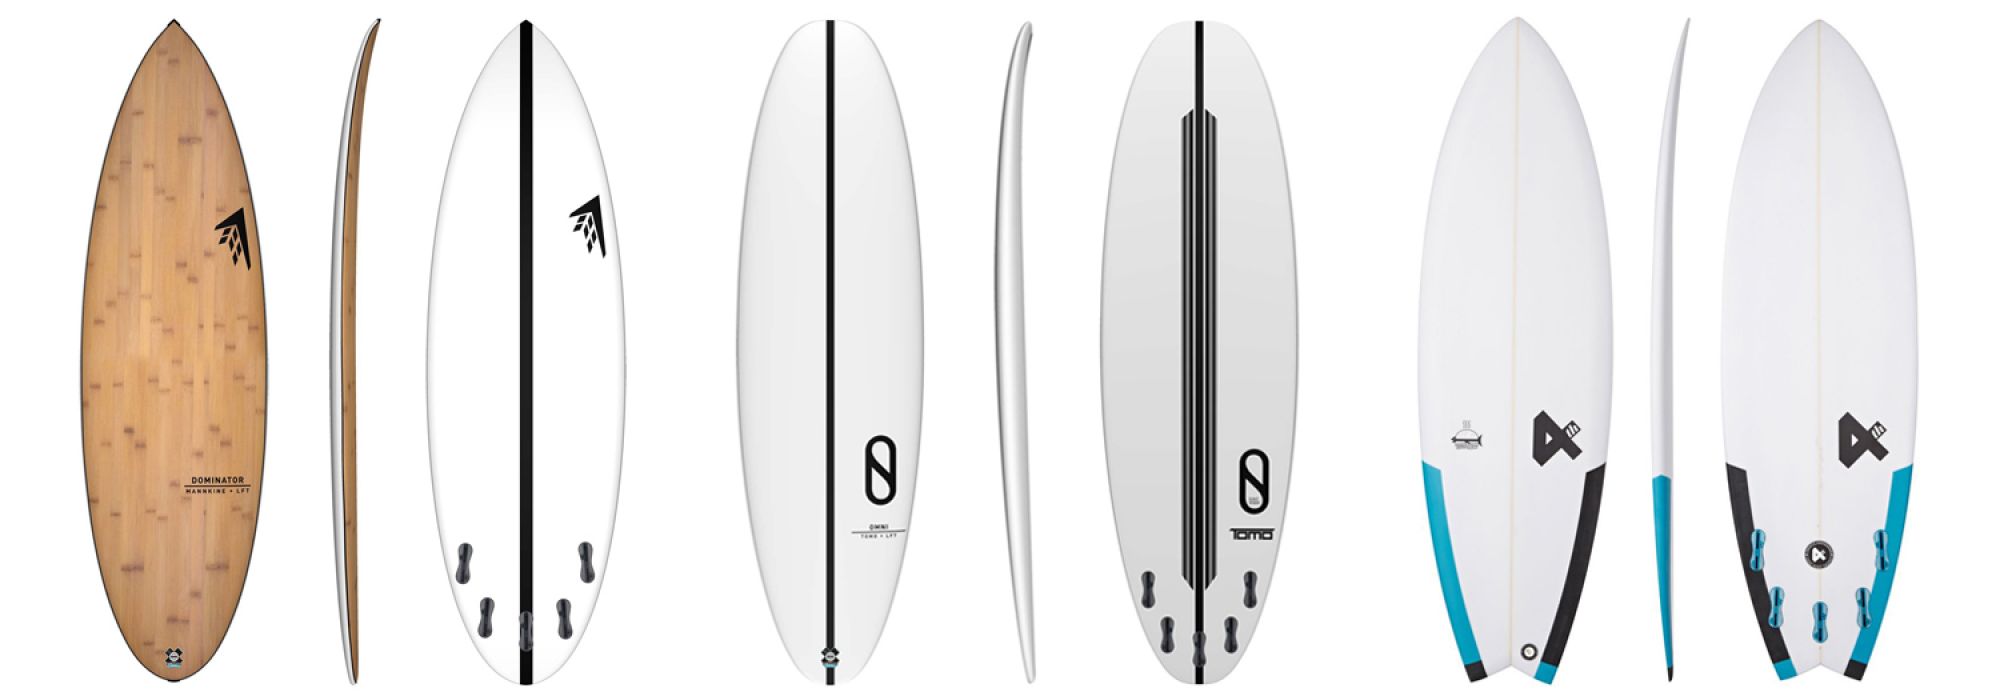 hybrid surfboard